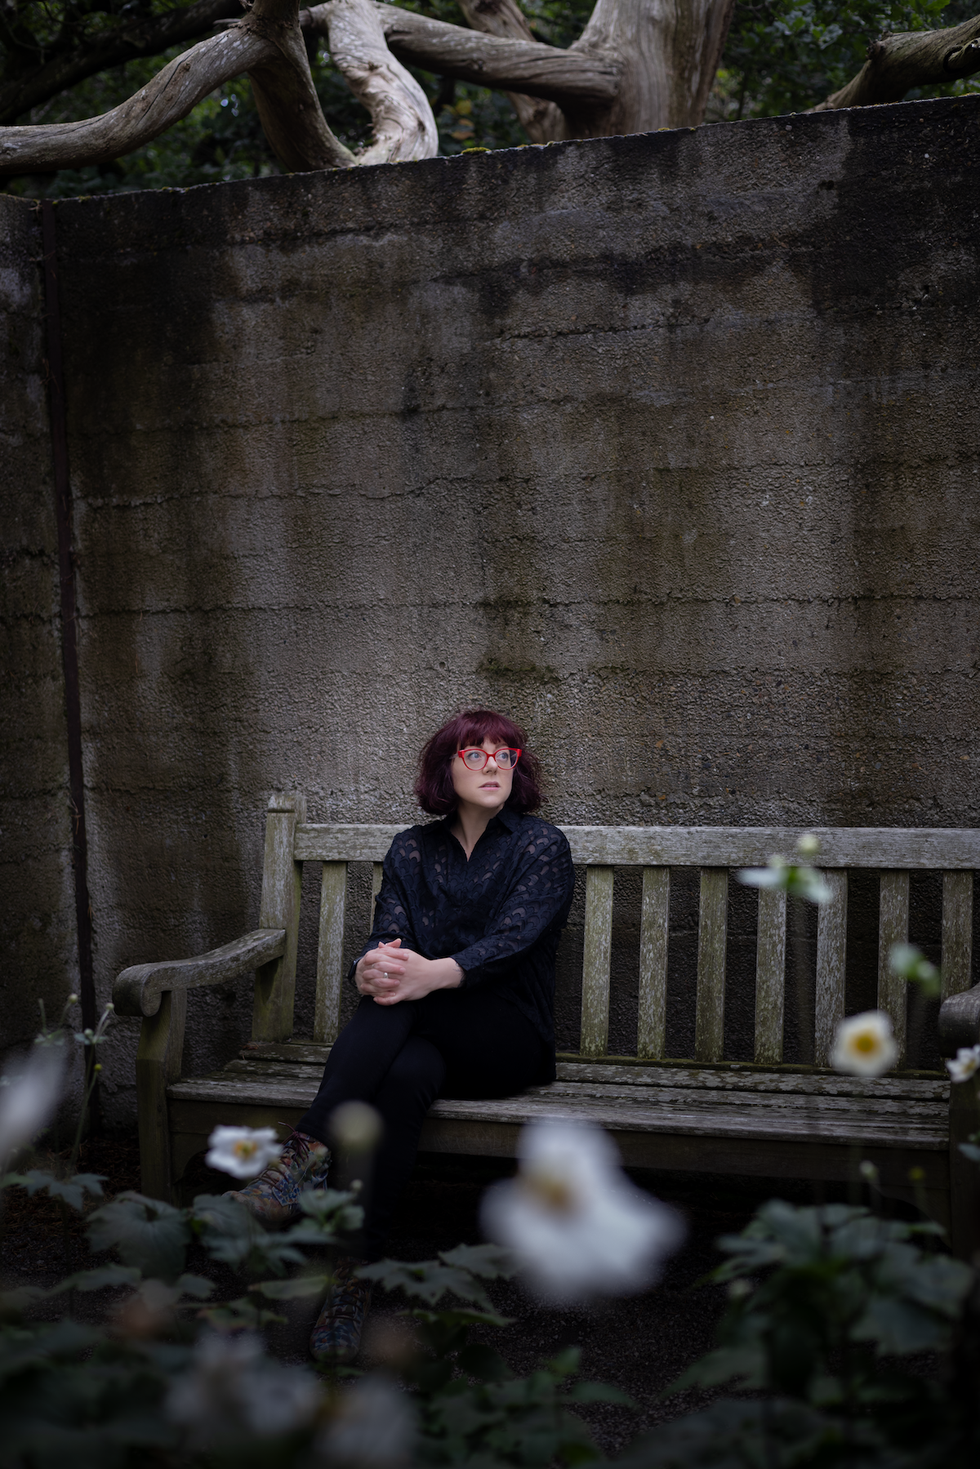 author ve schwab sitting on a bench in a garden